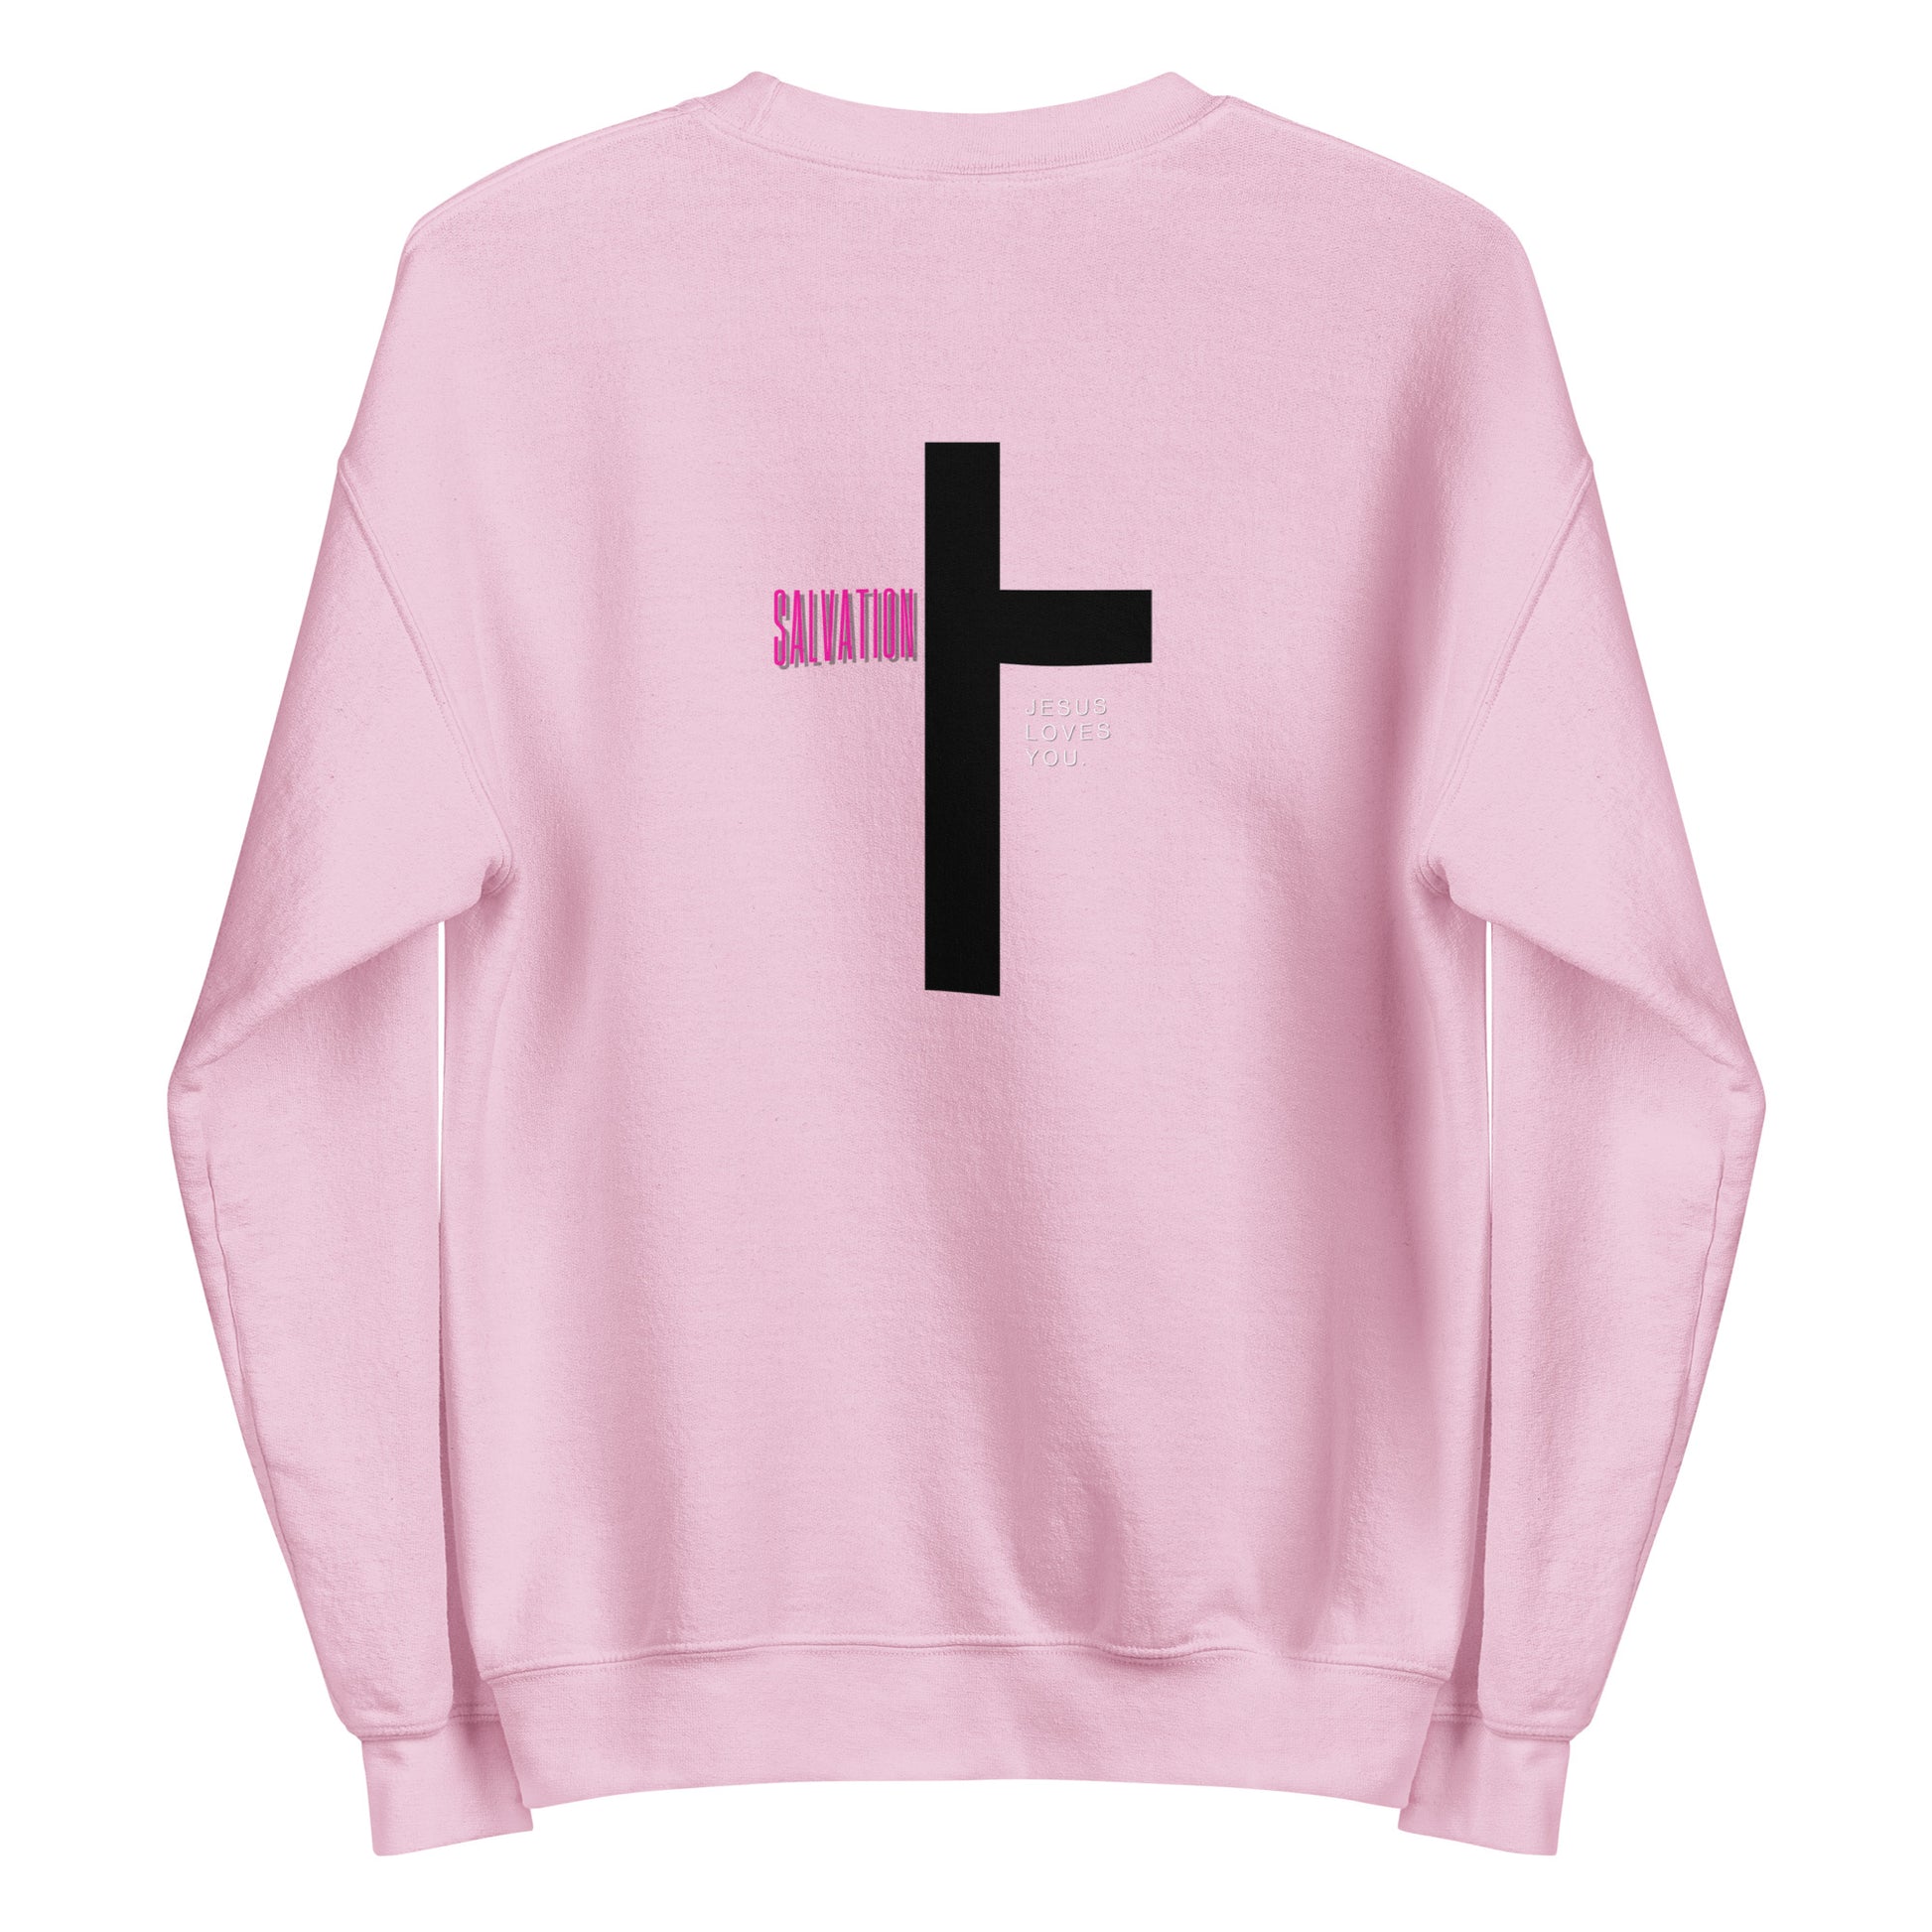 Salvation Unisex Sweatshirt - Shirts & Tops